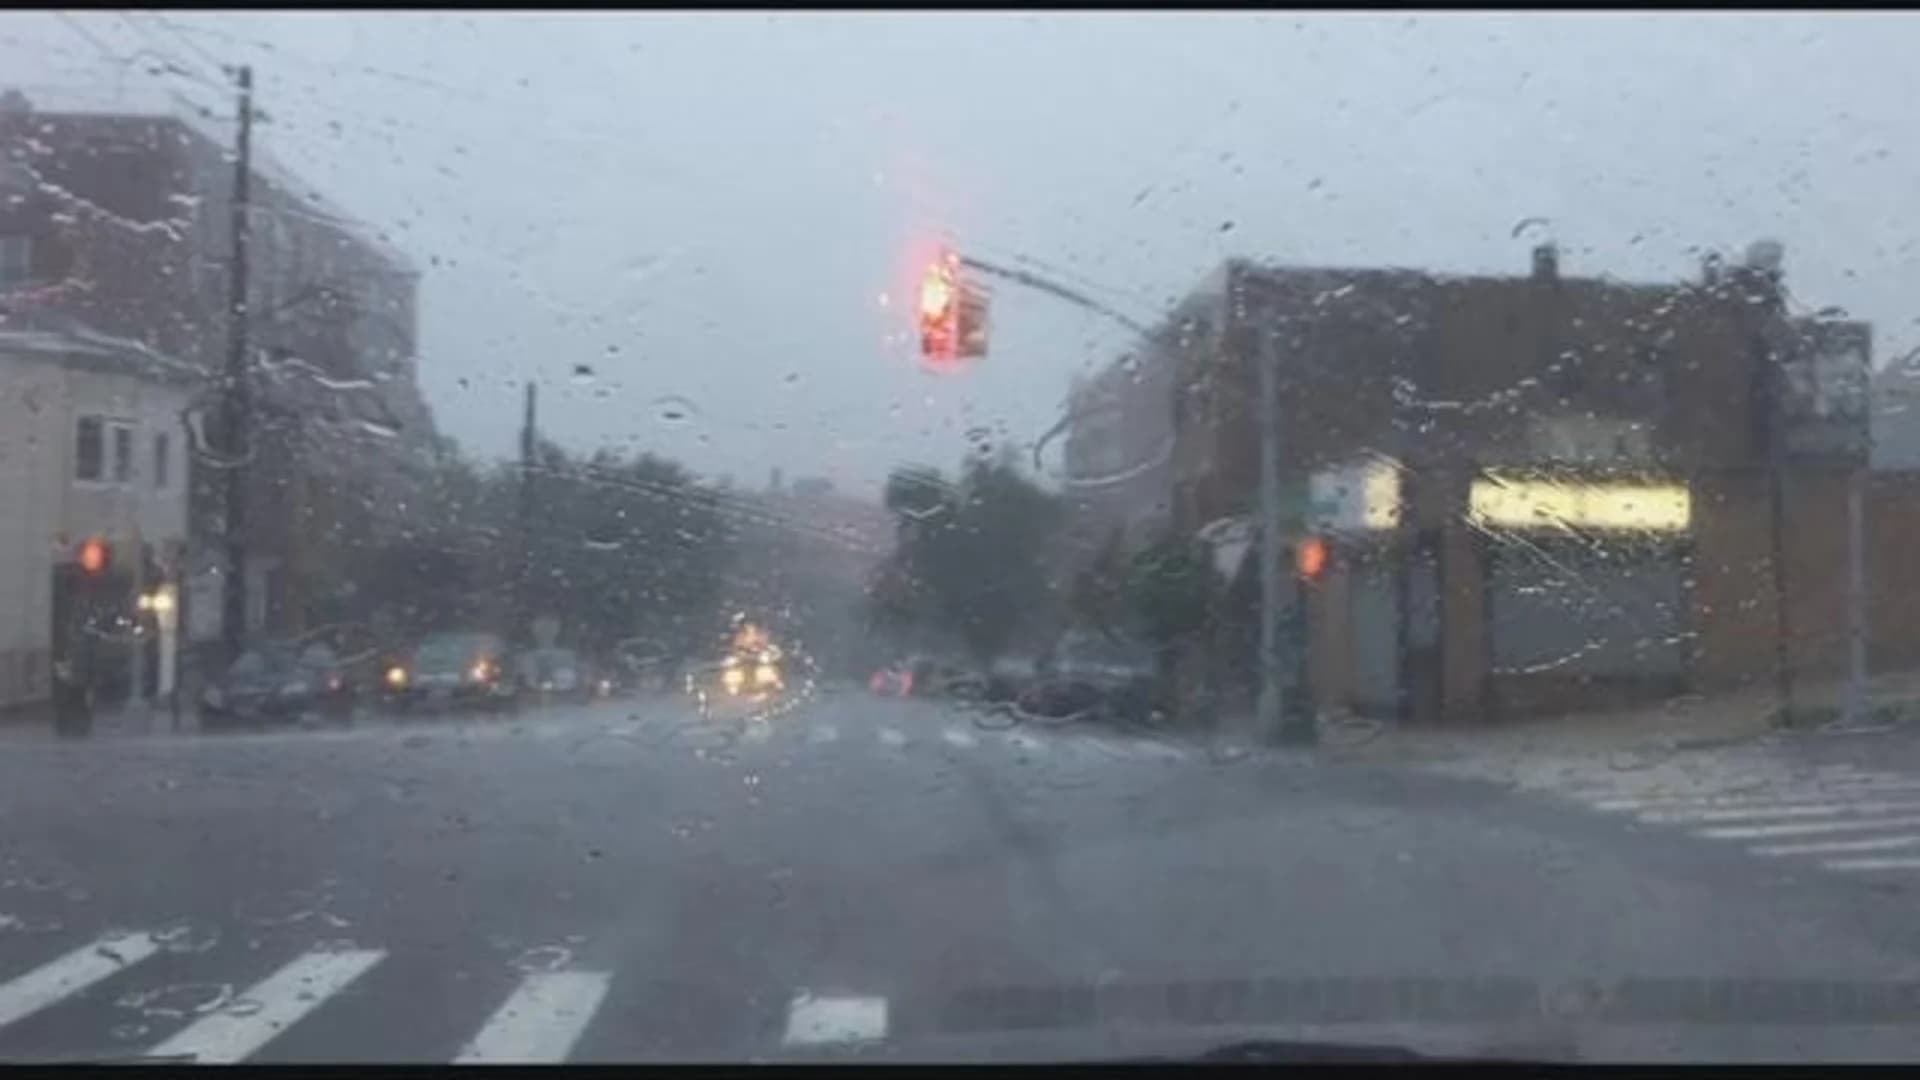 Heavy rains slam the Bronx